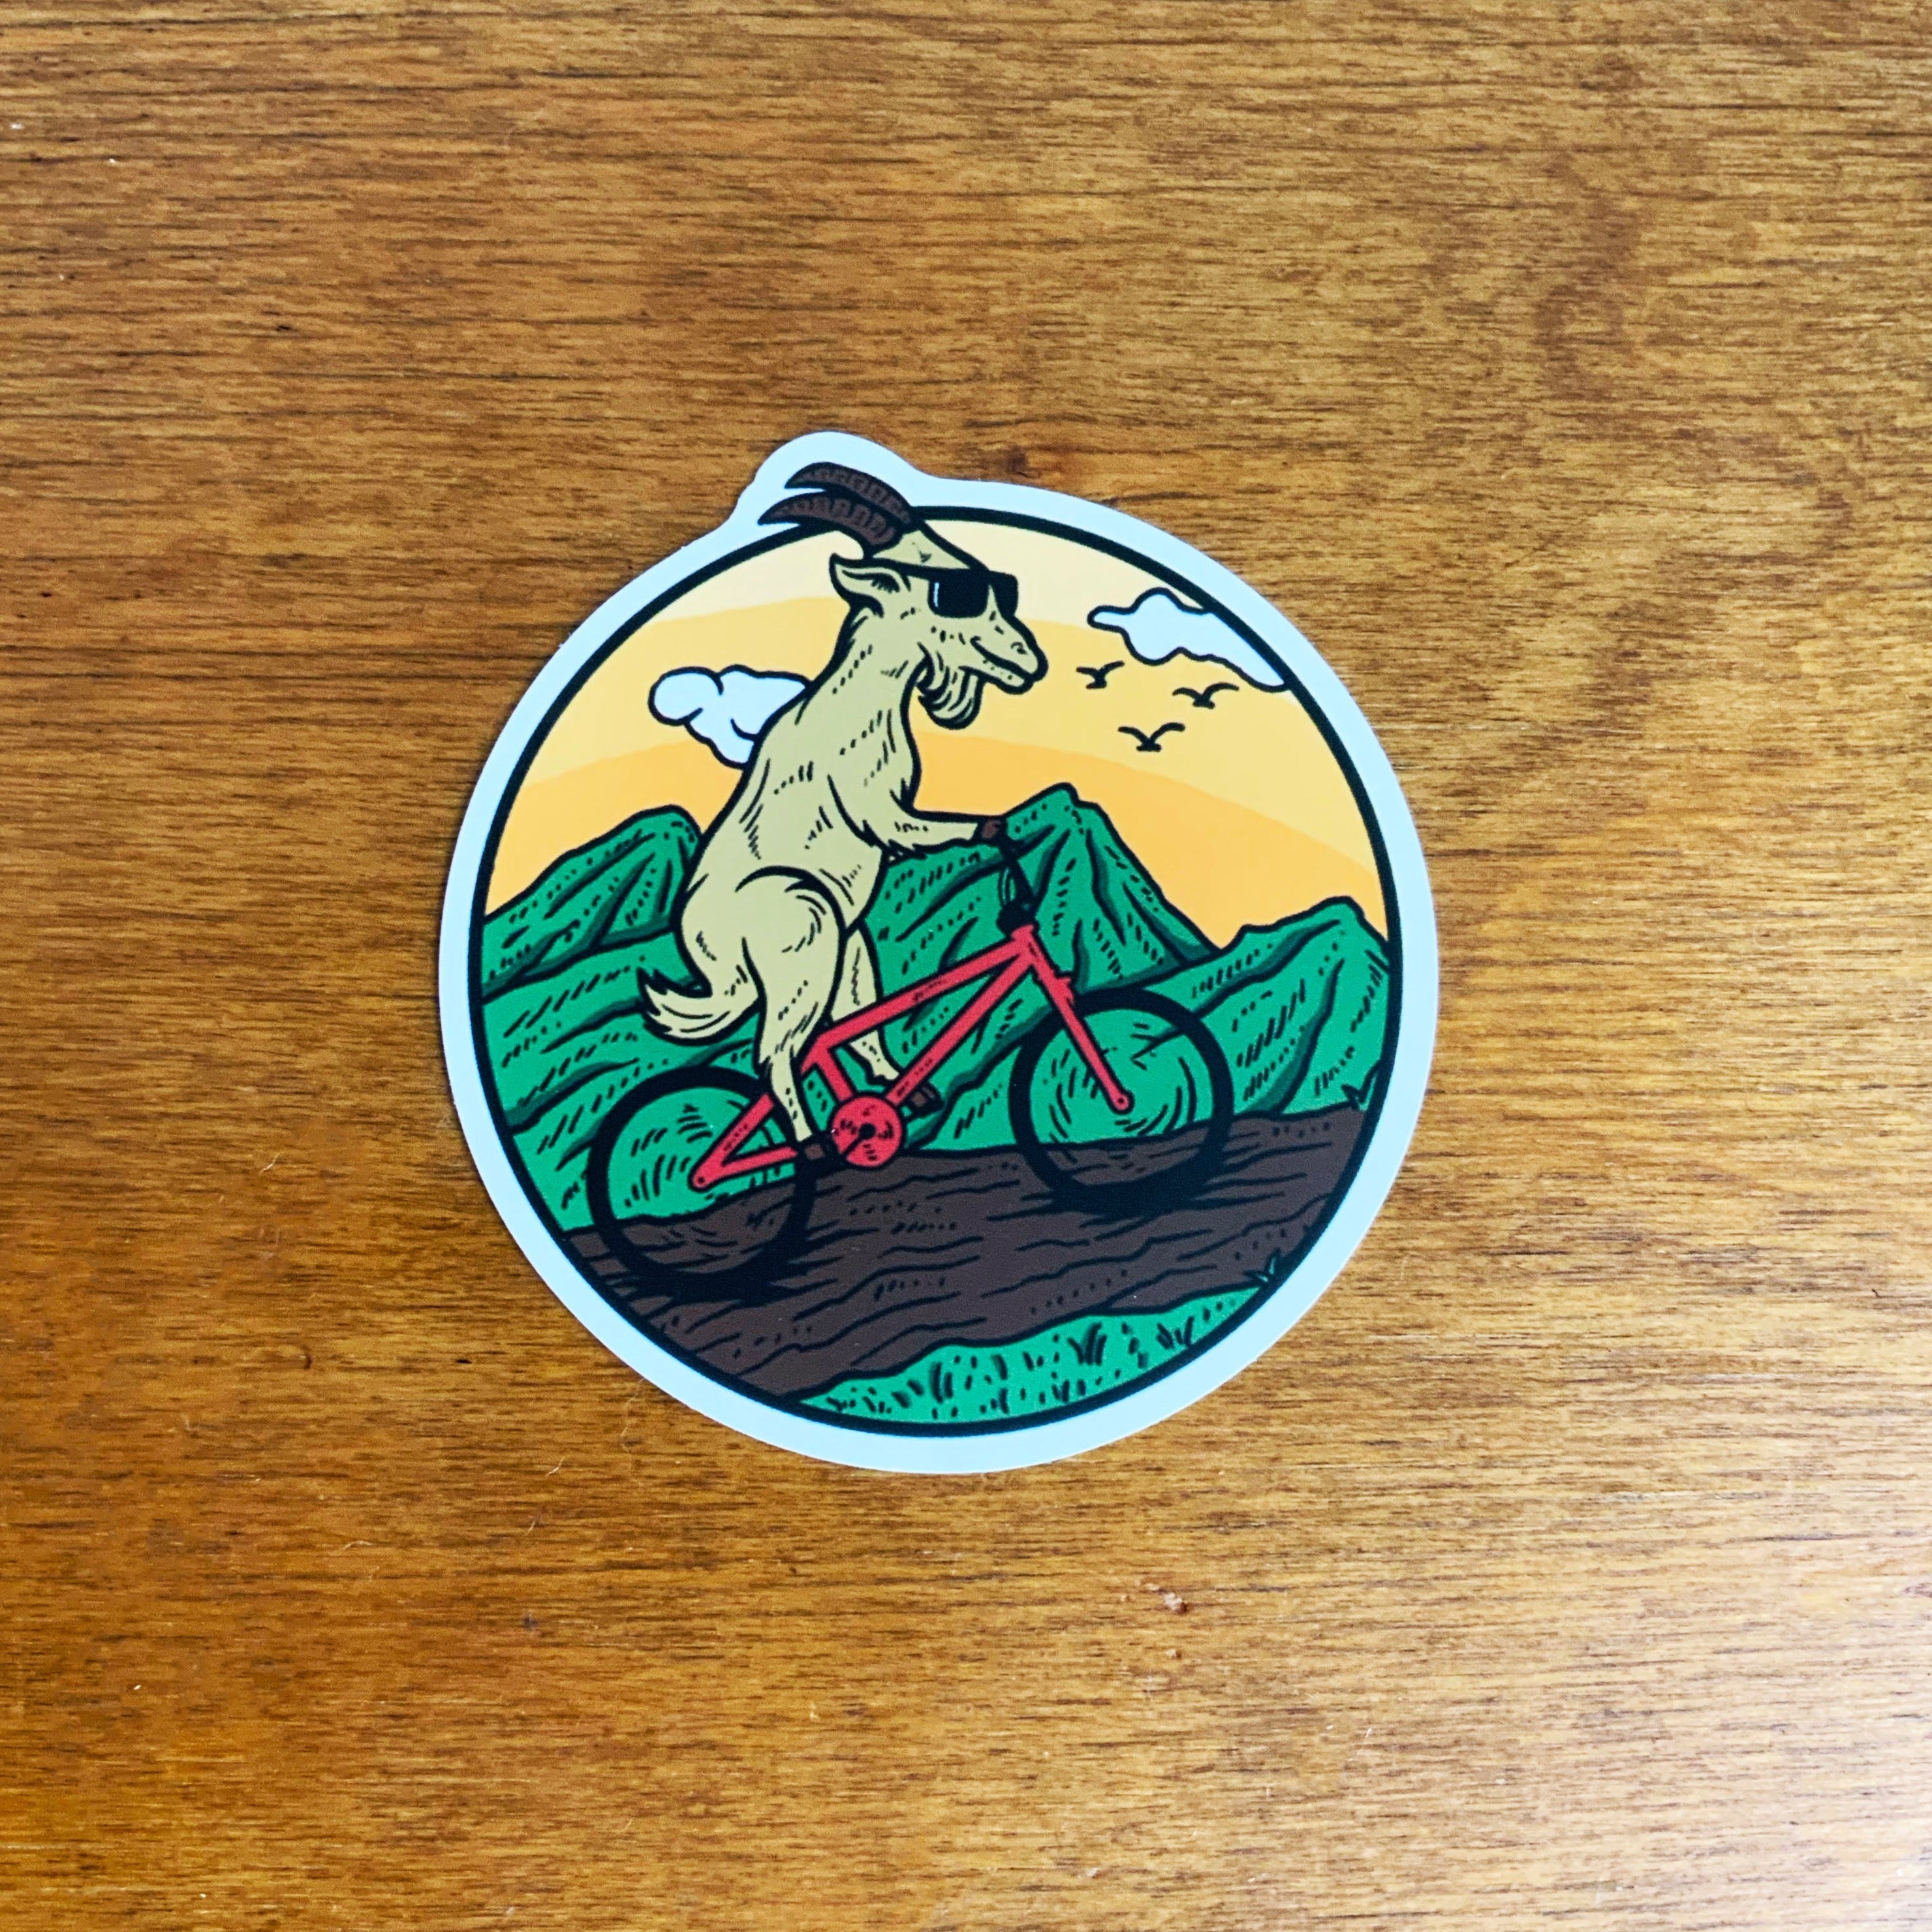 Goat Sticker, sticker, Pacific Rayne, Defiance Outdoor Gear Co.